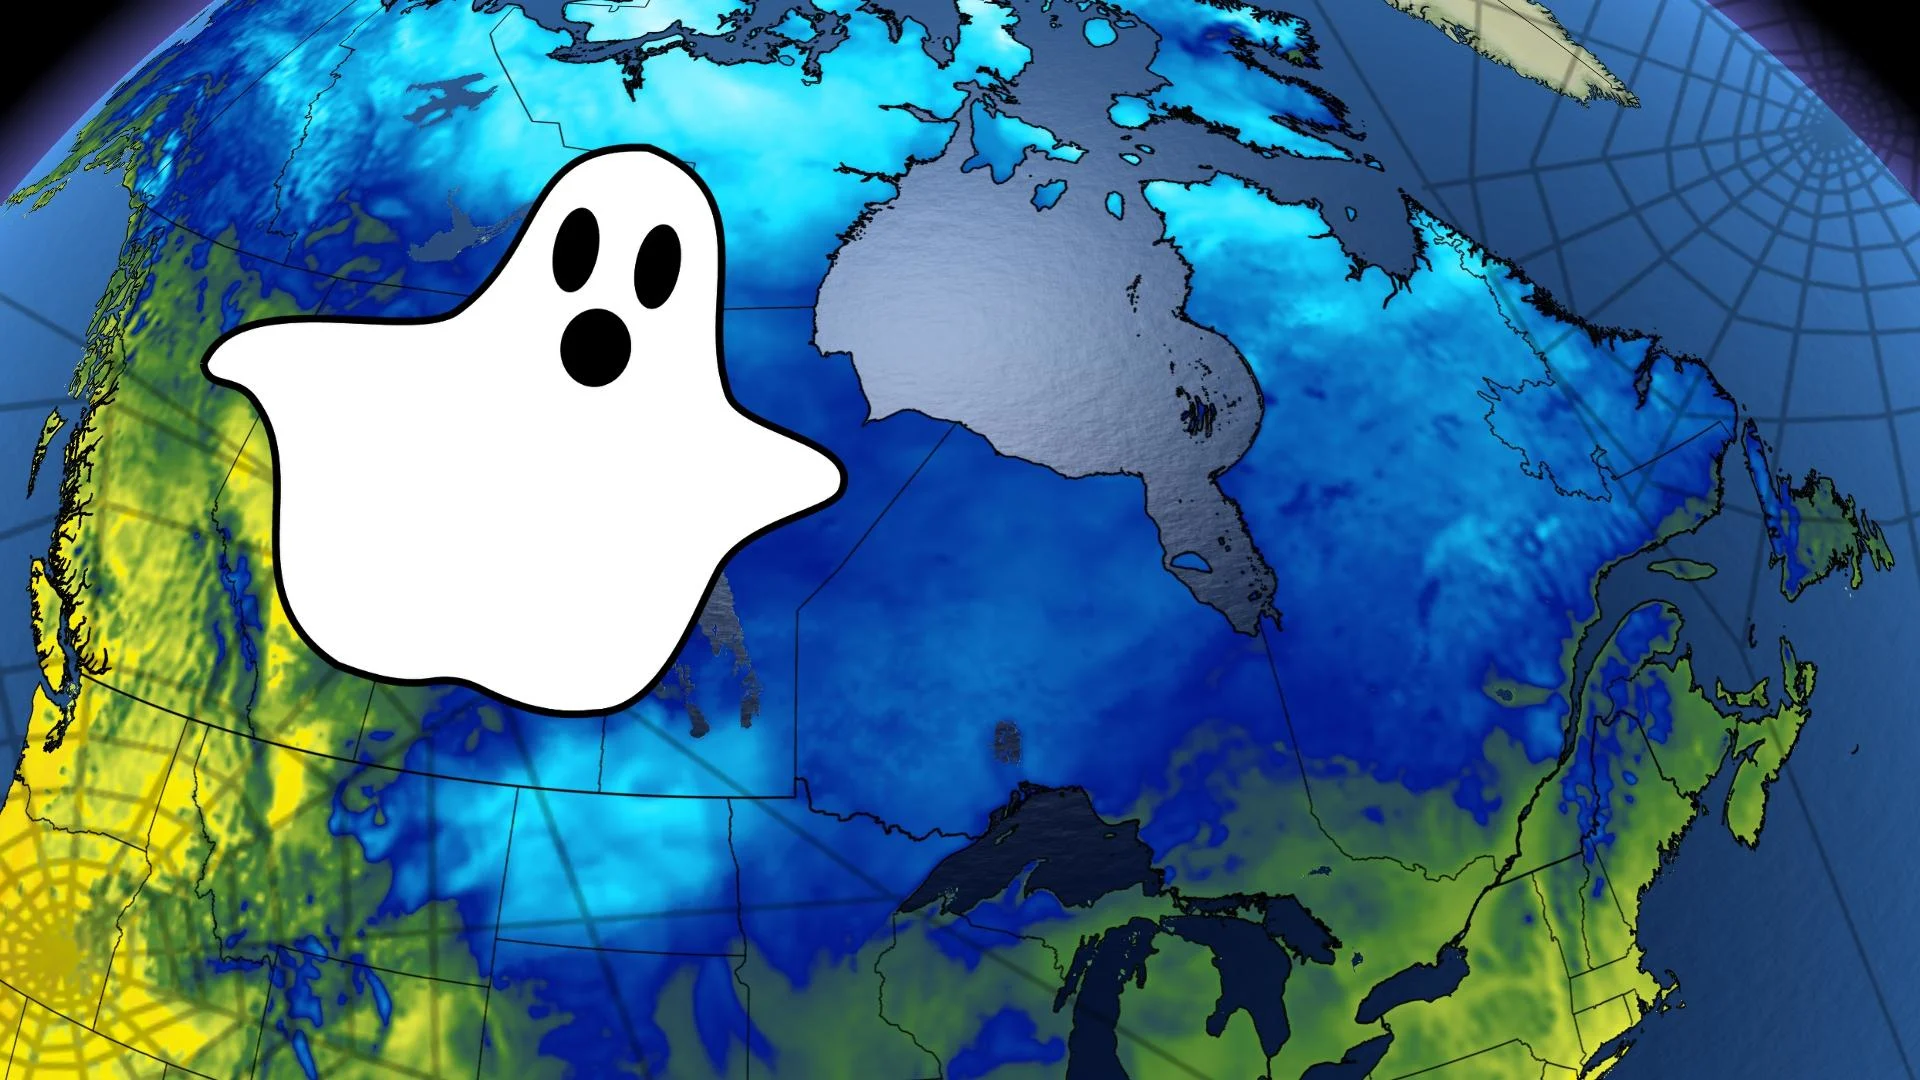 Canada's Halloween: Warm treats and chilly tricks await